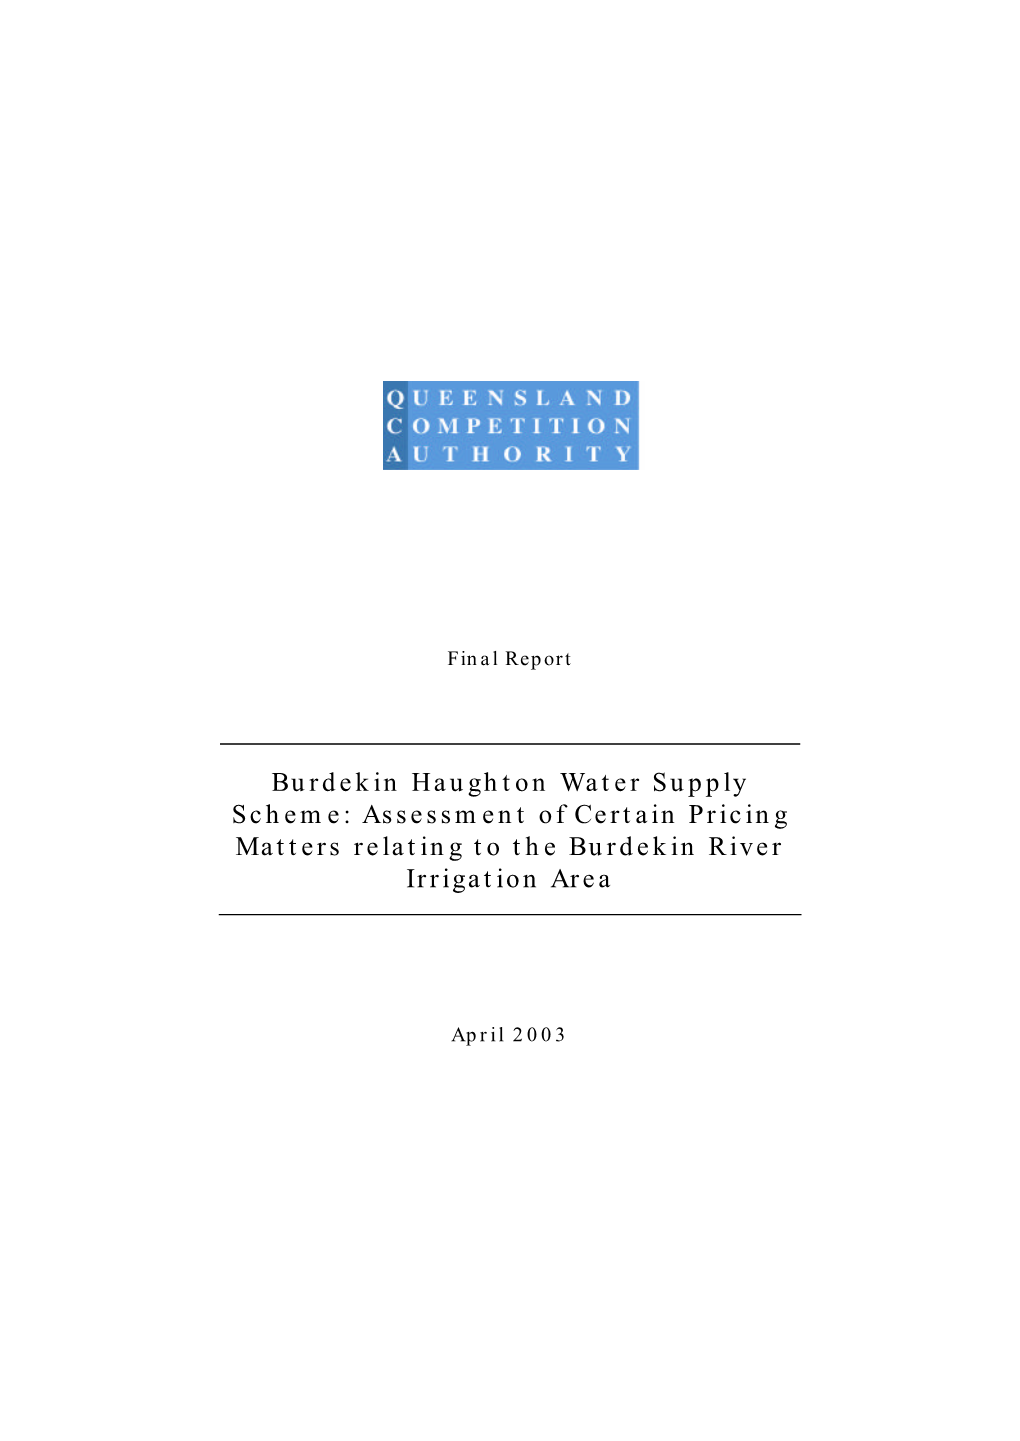 Burdekin Haughton Water Supply Scheme: Assessment of Certain Pricing Matters Relating to the Burdekin River Irrigation Area